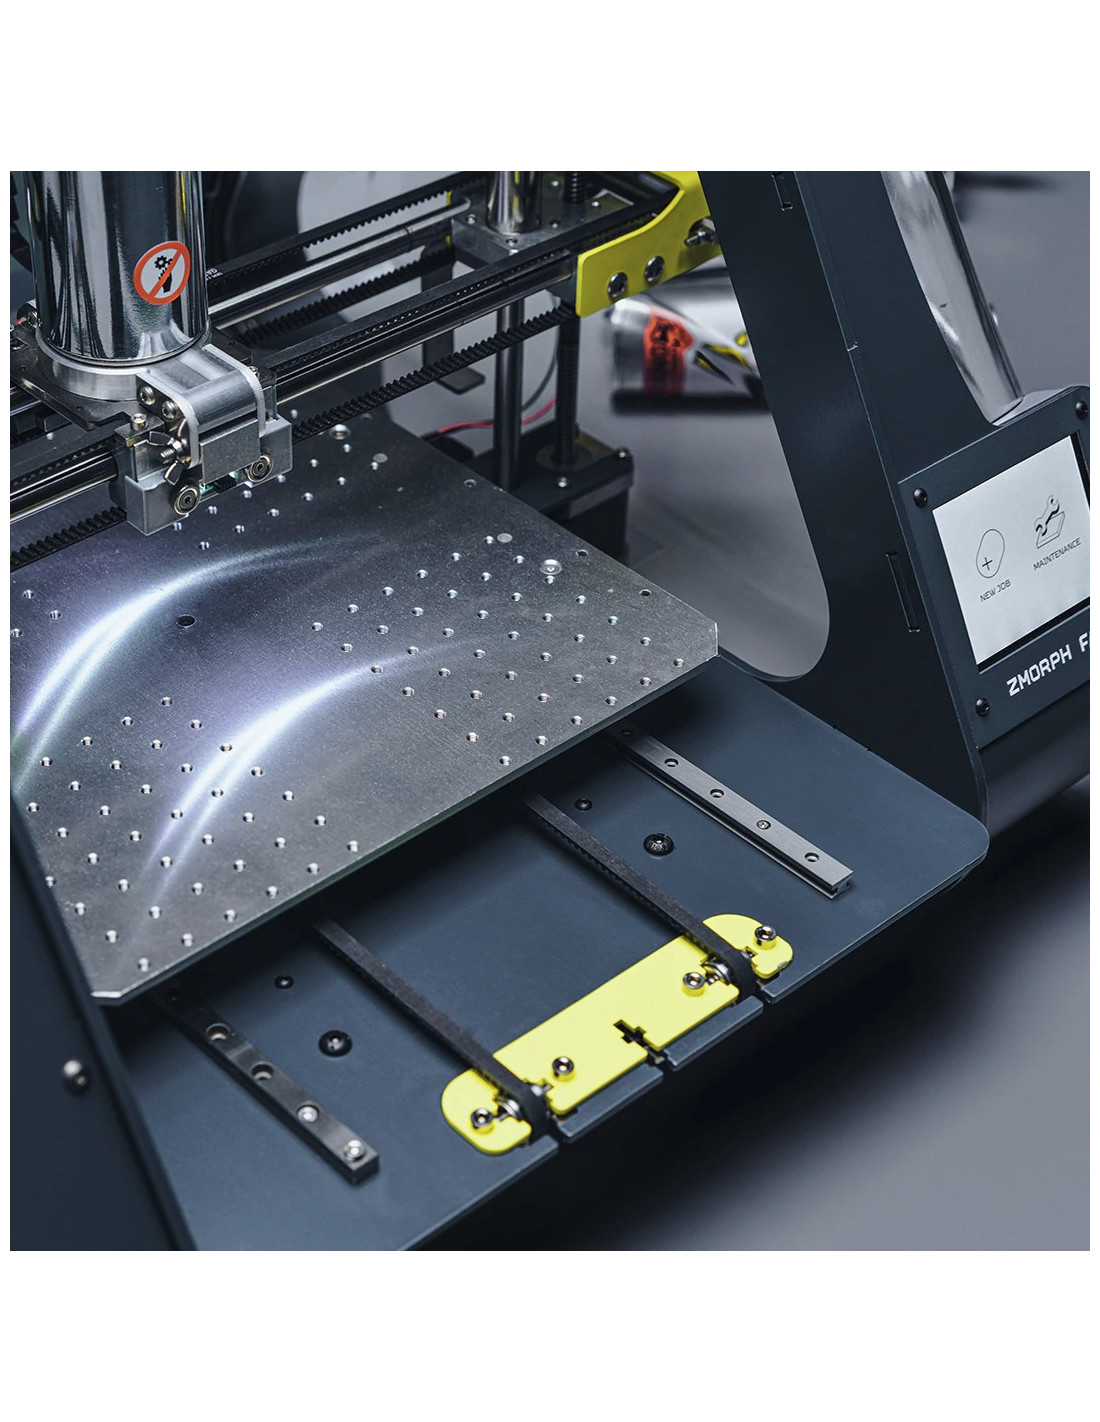 Multi-Tool - ZMorph FAB All-In-One 3D Printer